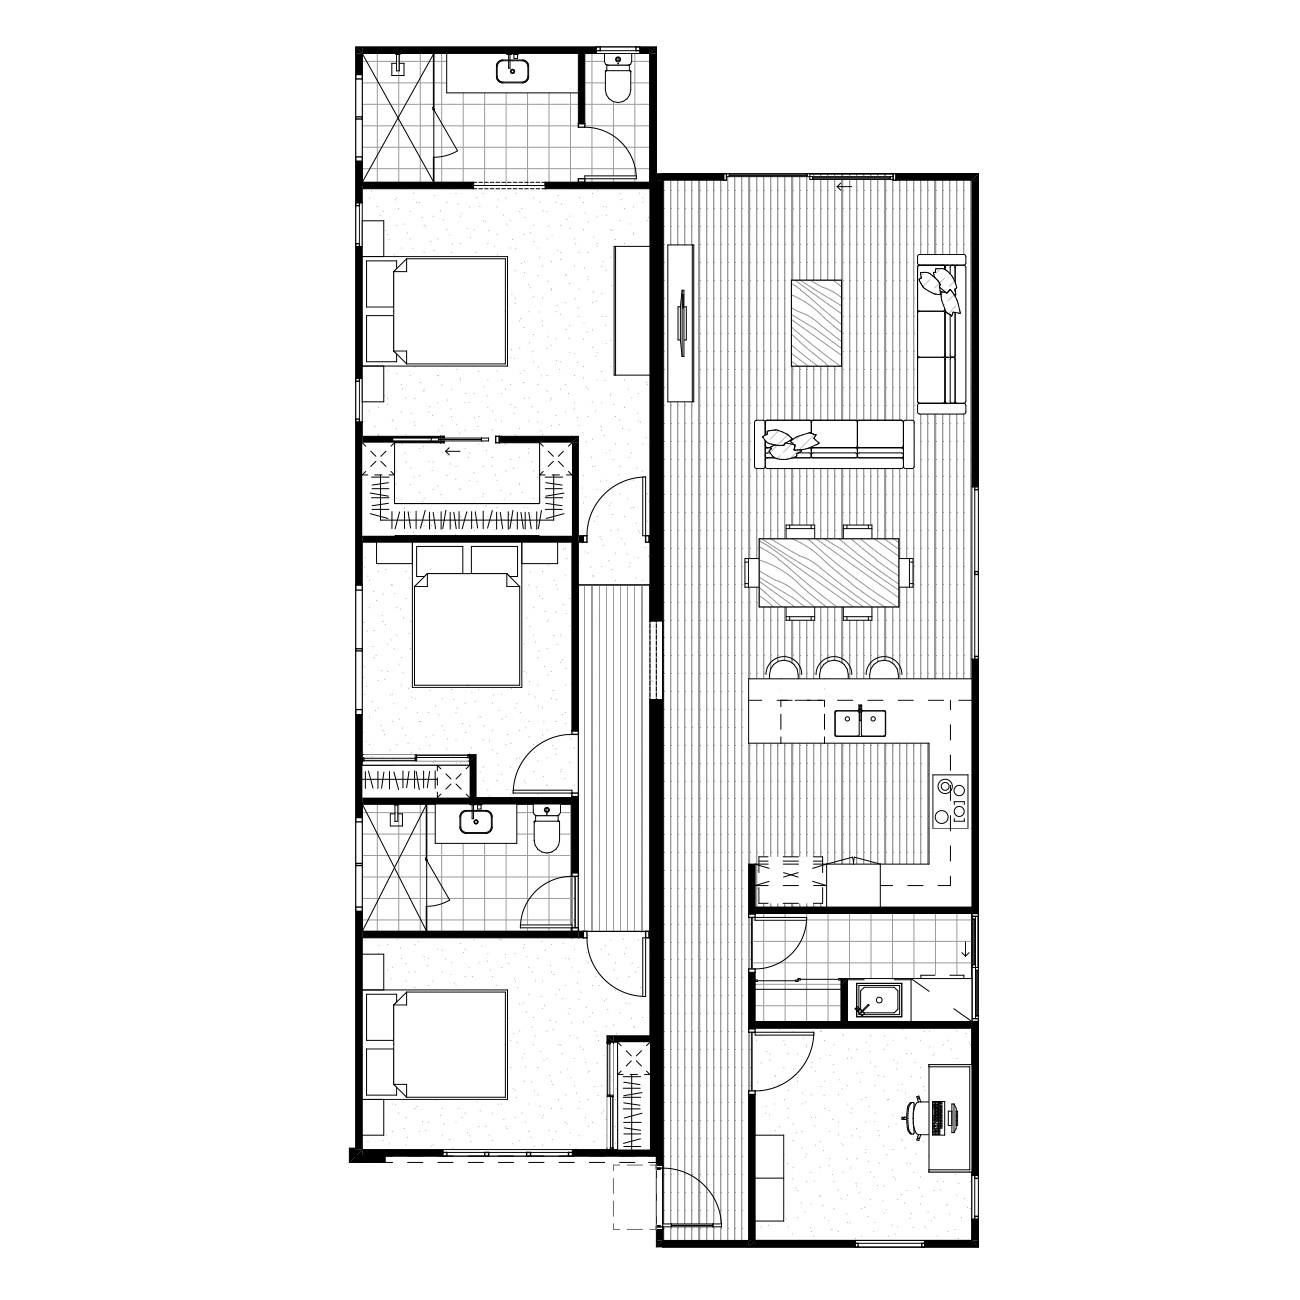 The 3 bedroom floorplan Foxy home designed by Fox Modular